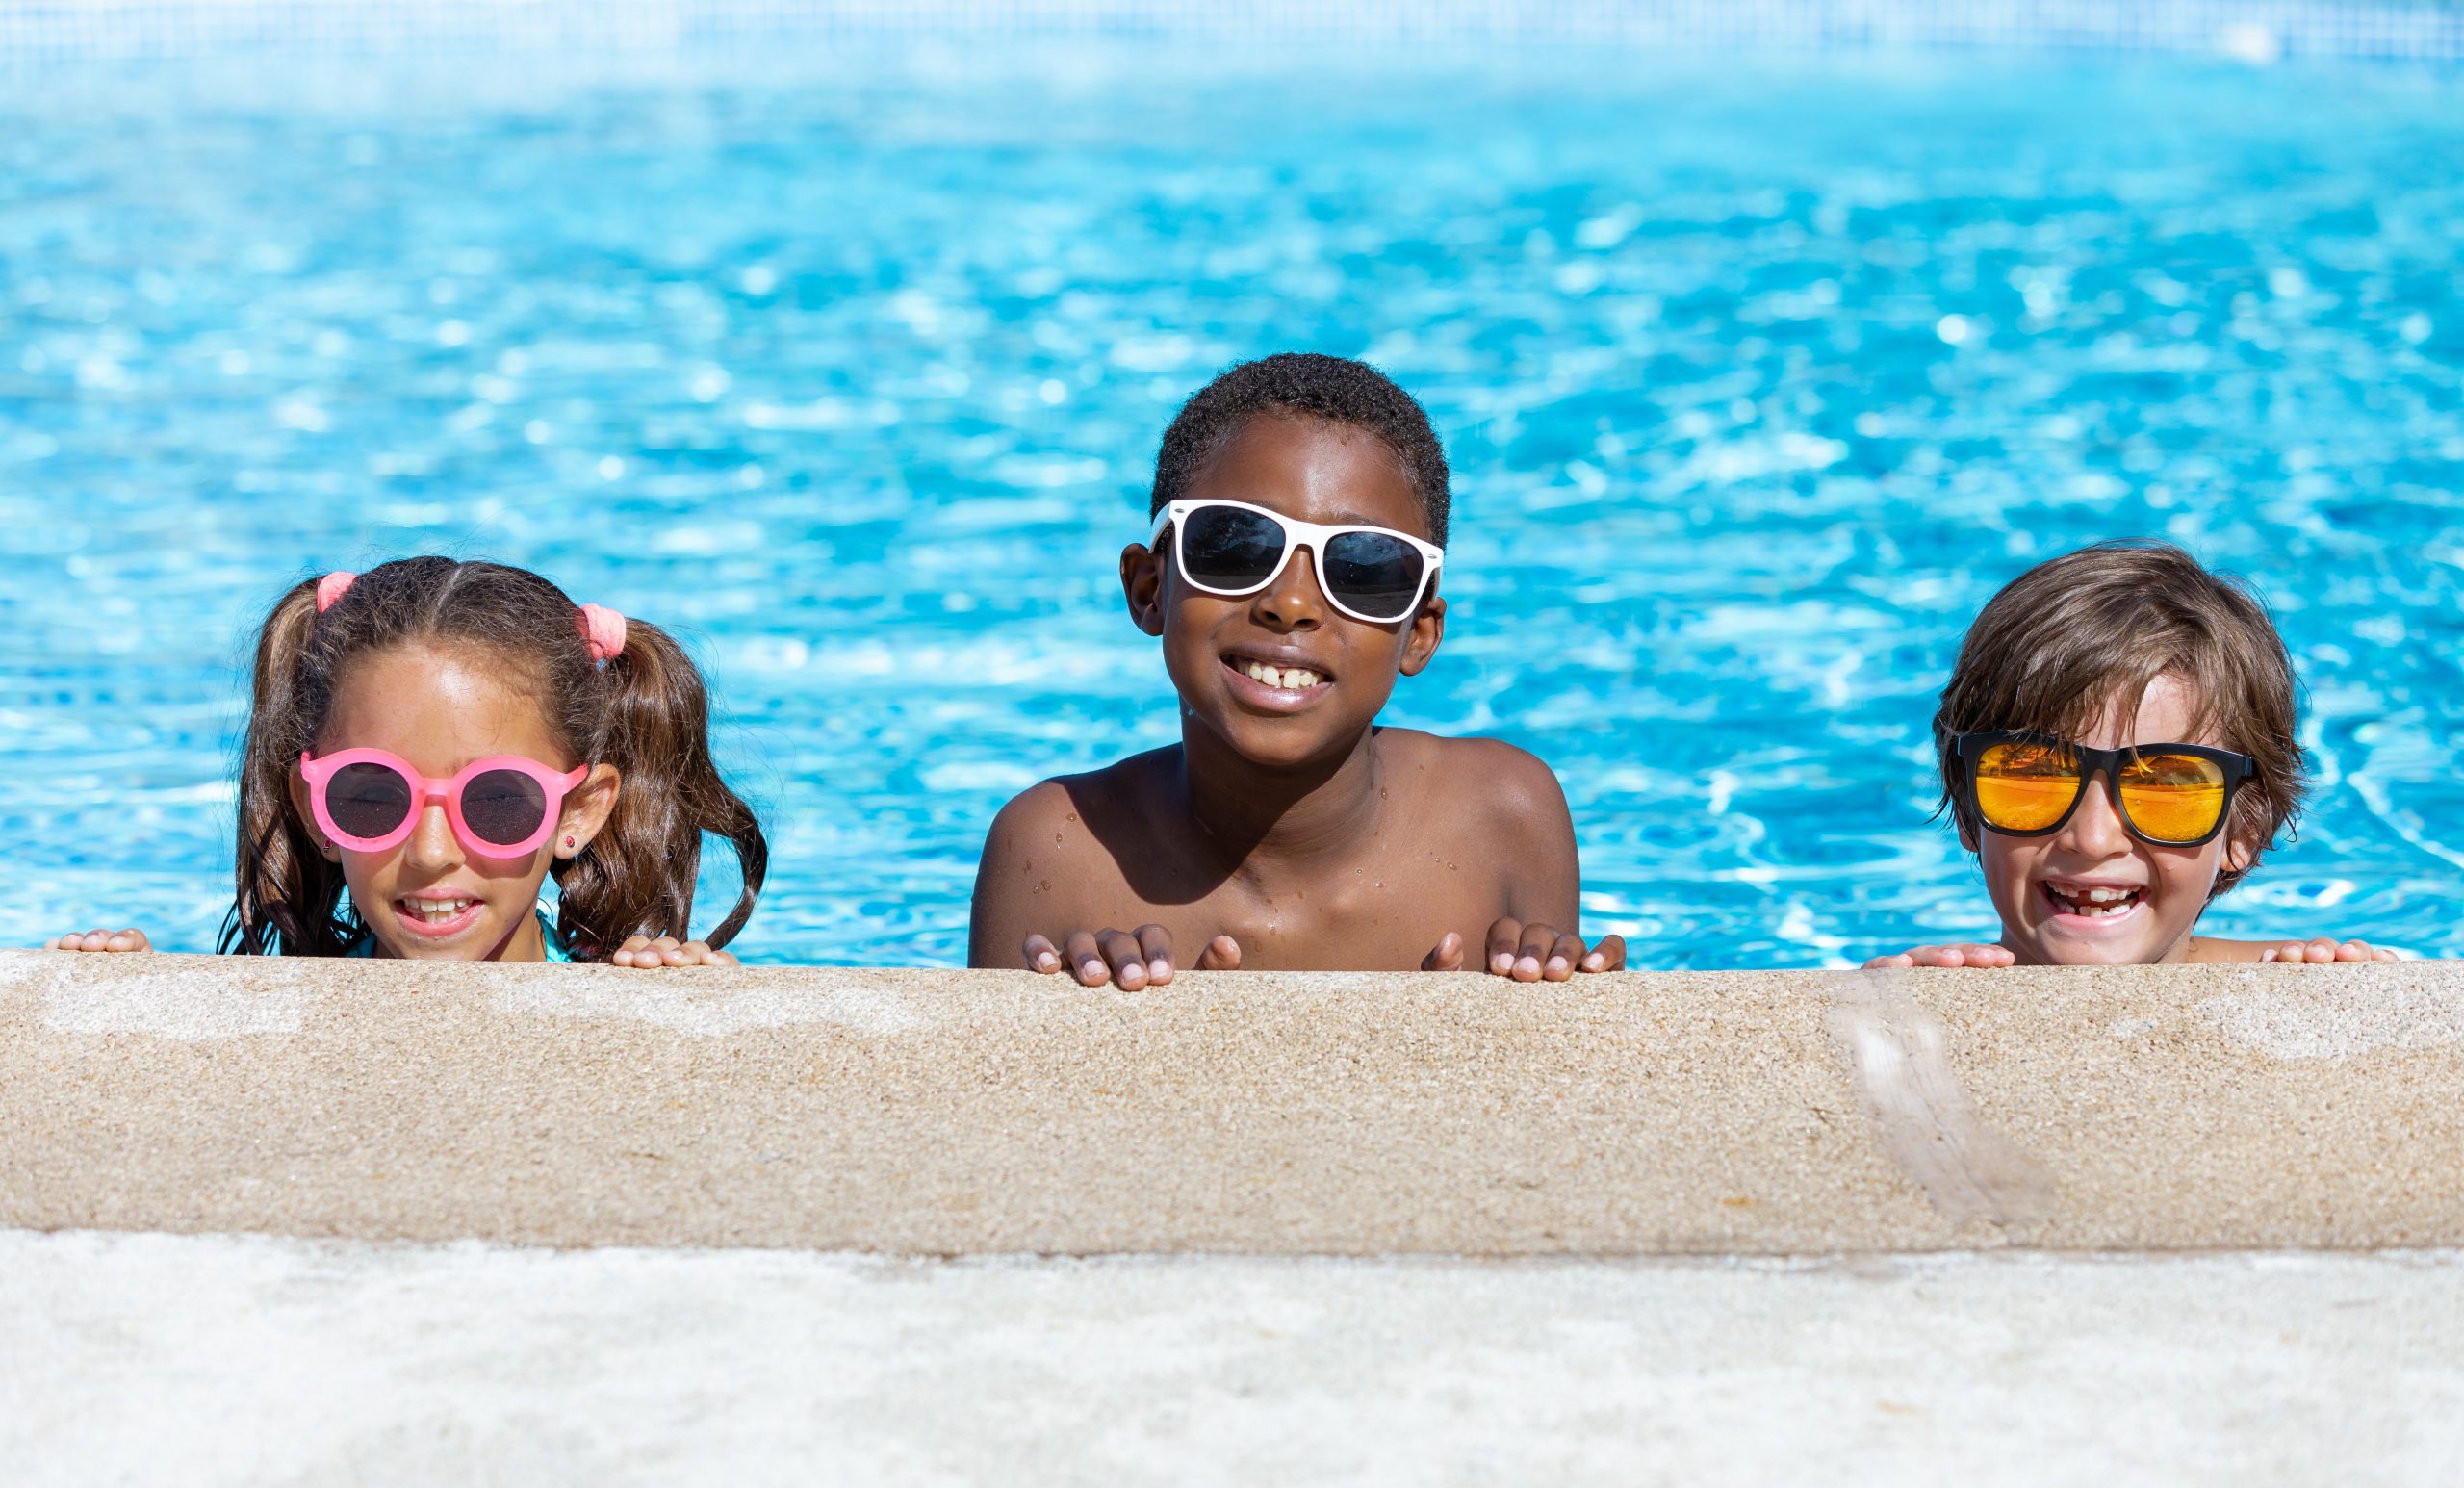 Three kids wearing sunglasses in a pool.